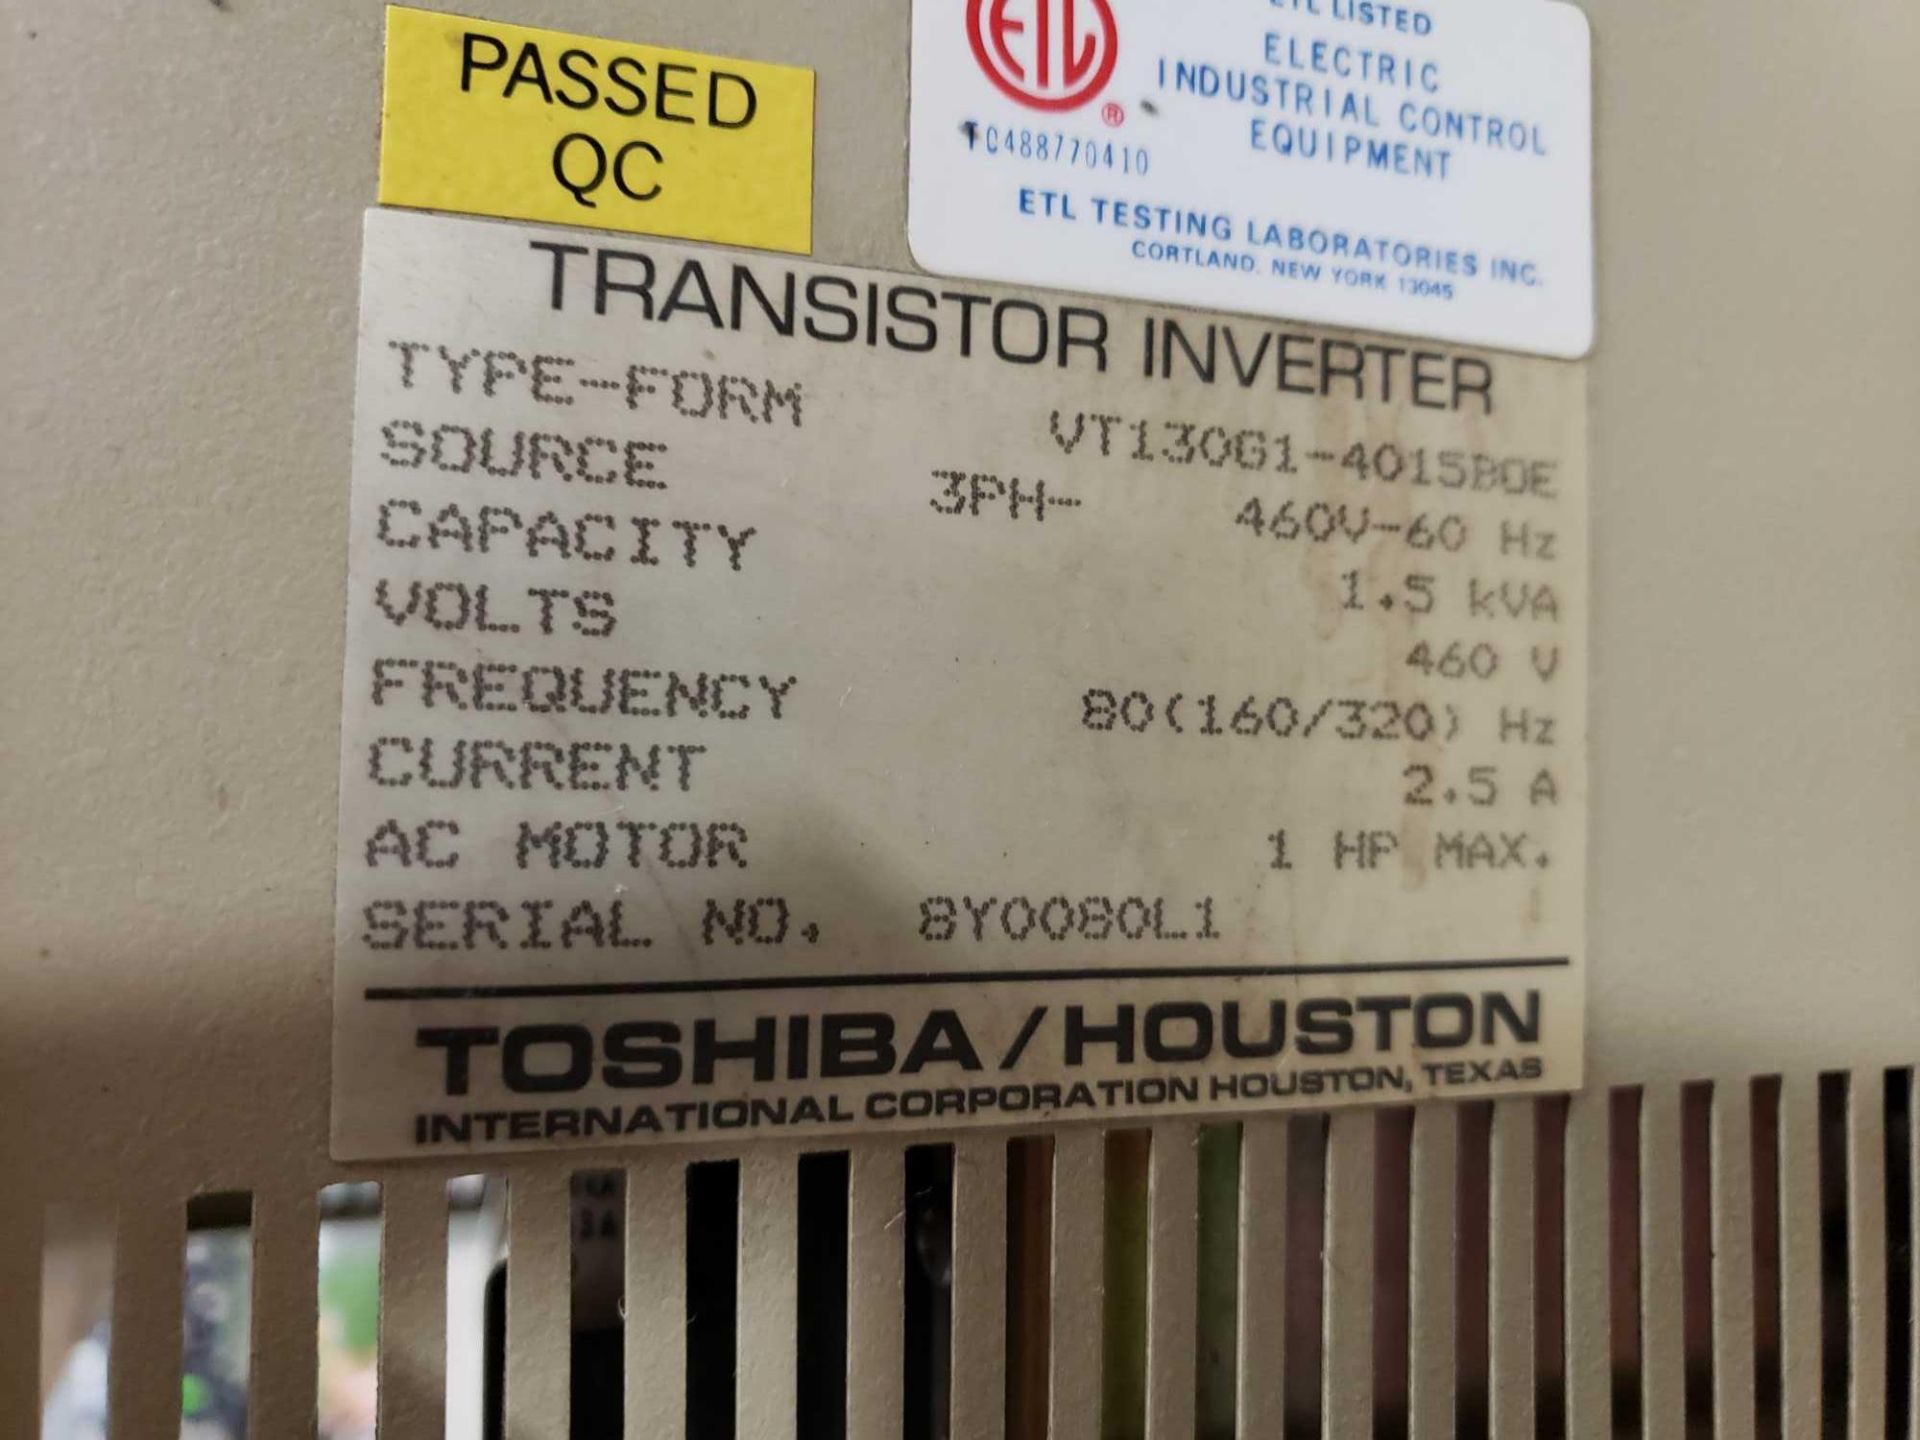 Toshiba Tosvert-130G1 drive type VT130G1-4015BOE. - Image 3 of 3